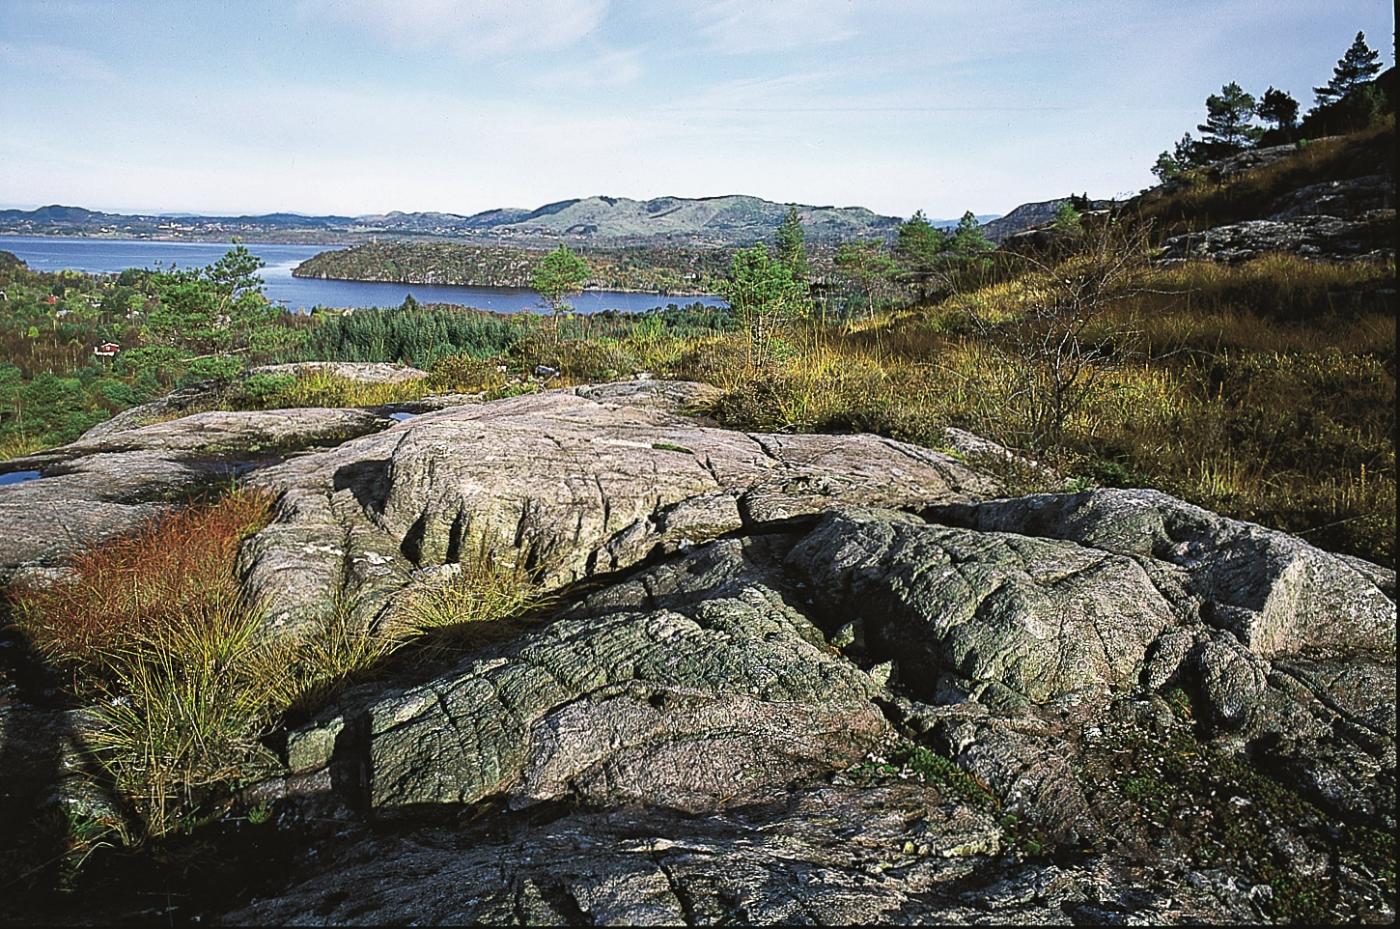 Eclogite bedrock at Ådnefjellet.